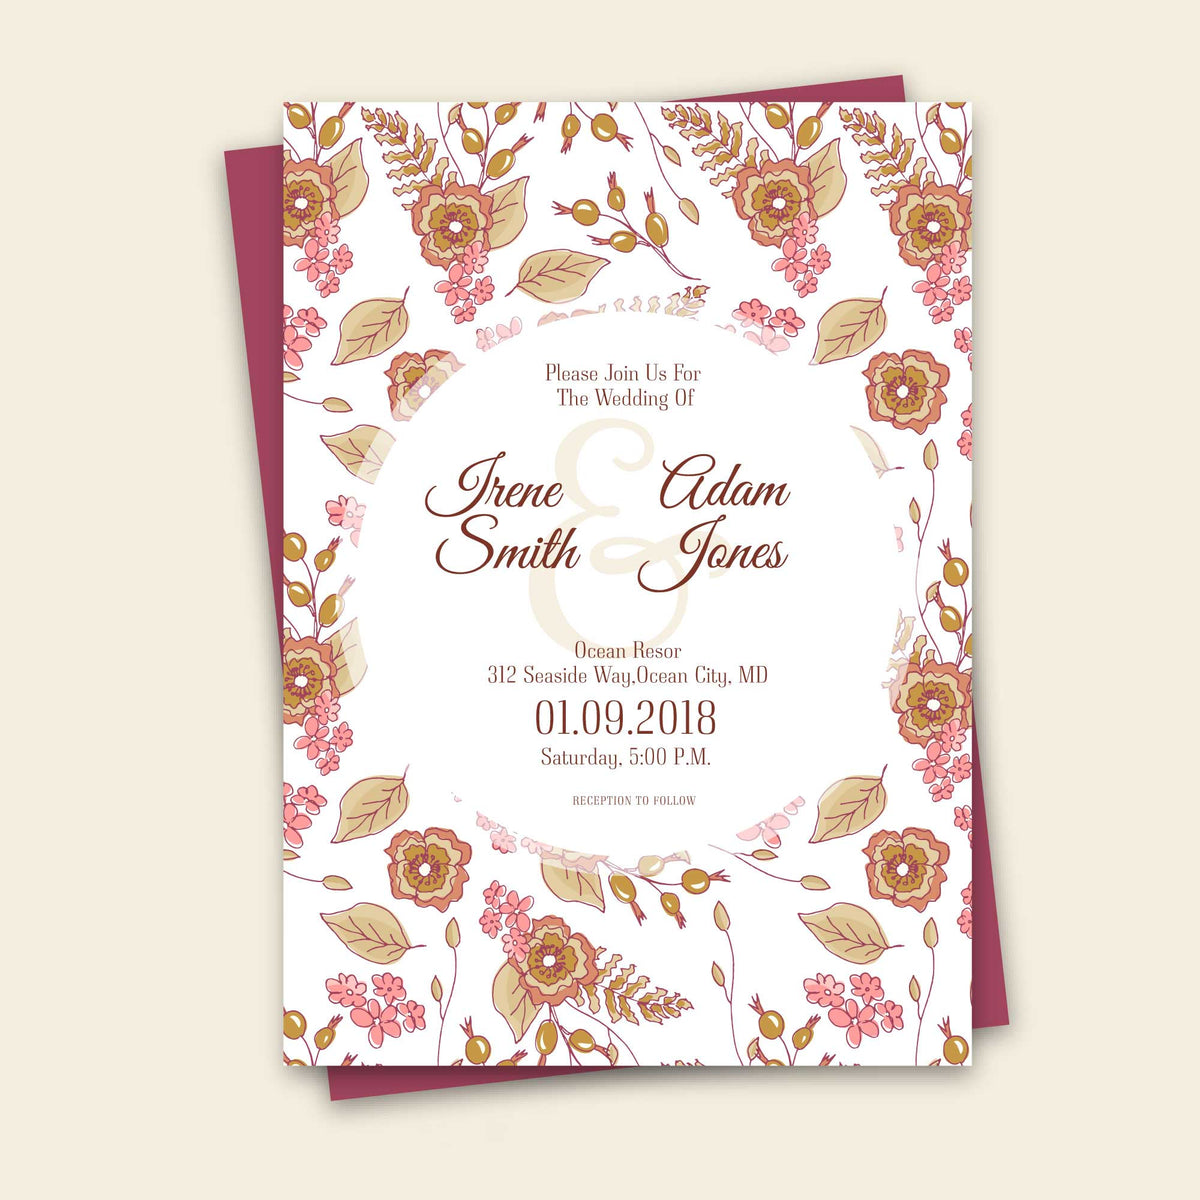 Plantable Floral Ornaments Wedding Invitation Card